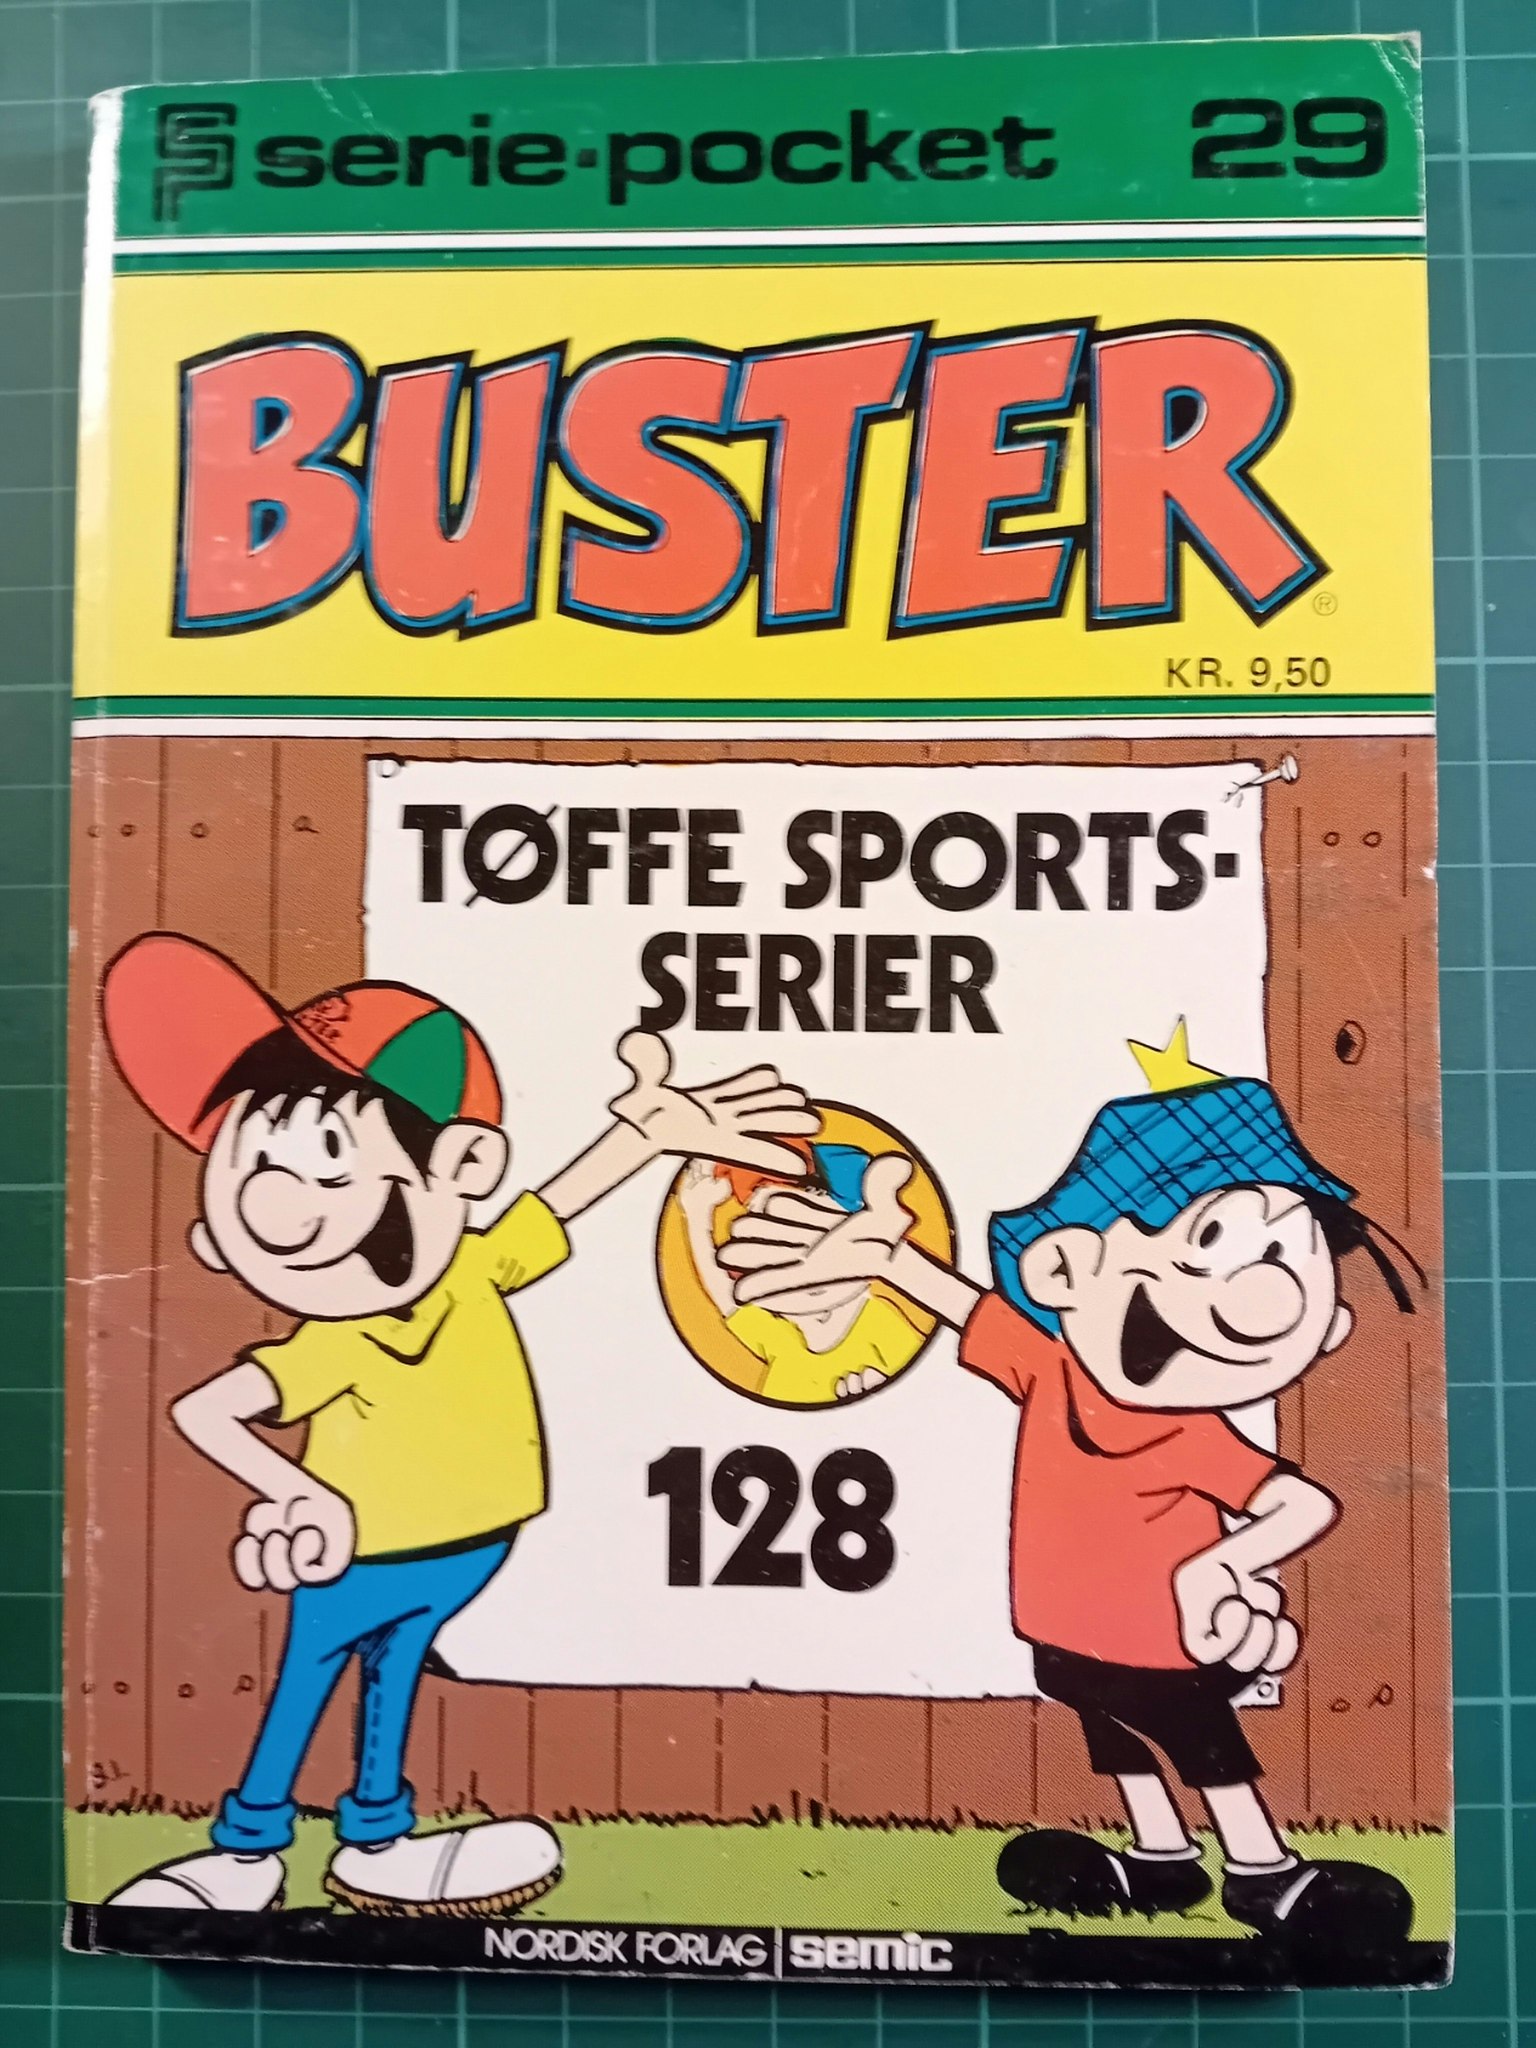 Serie-pocket 029 : Buster